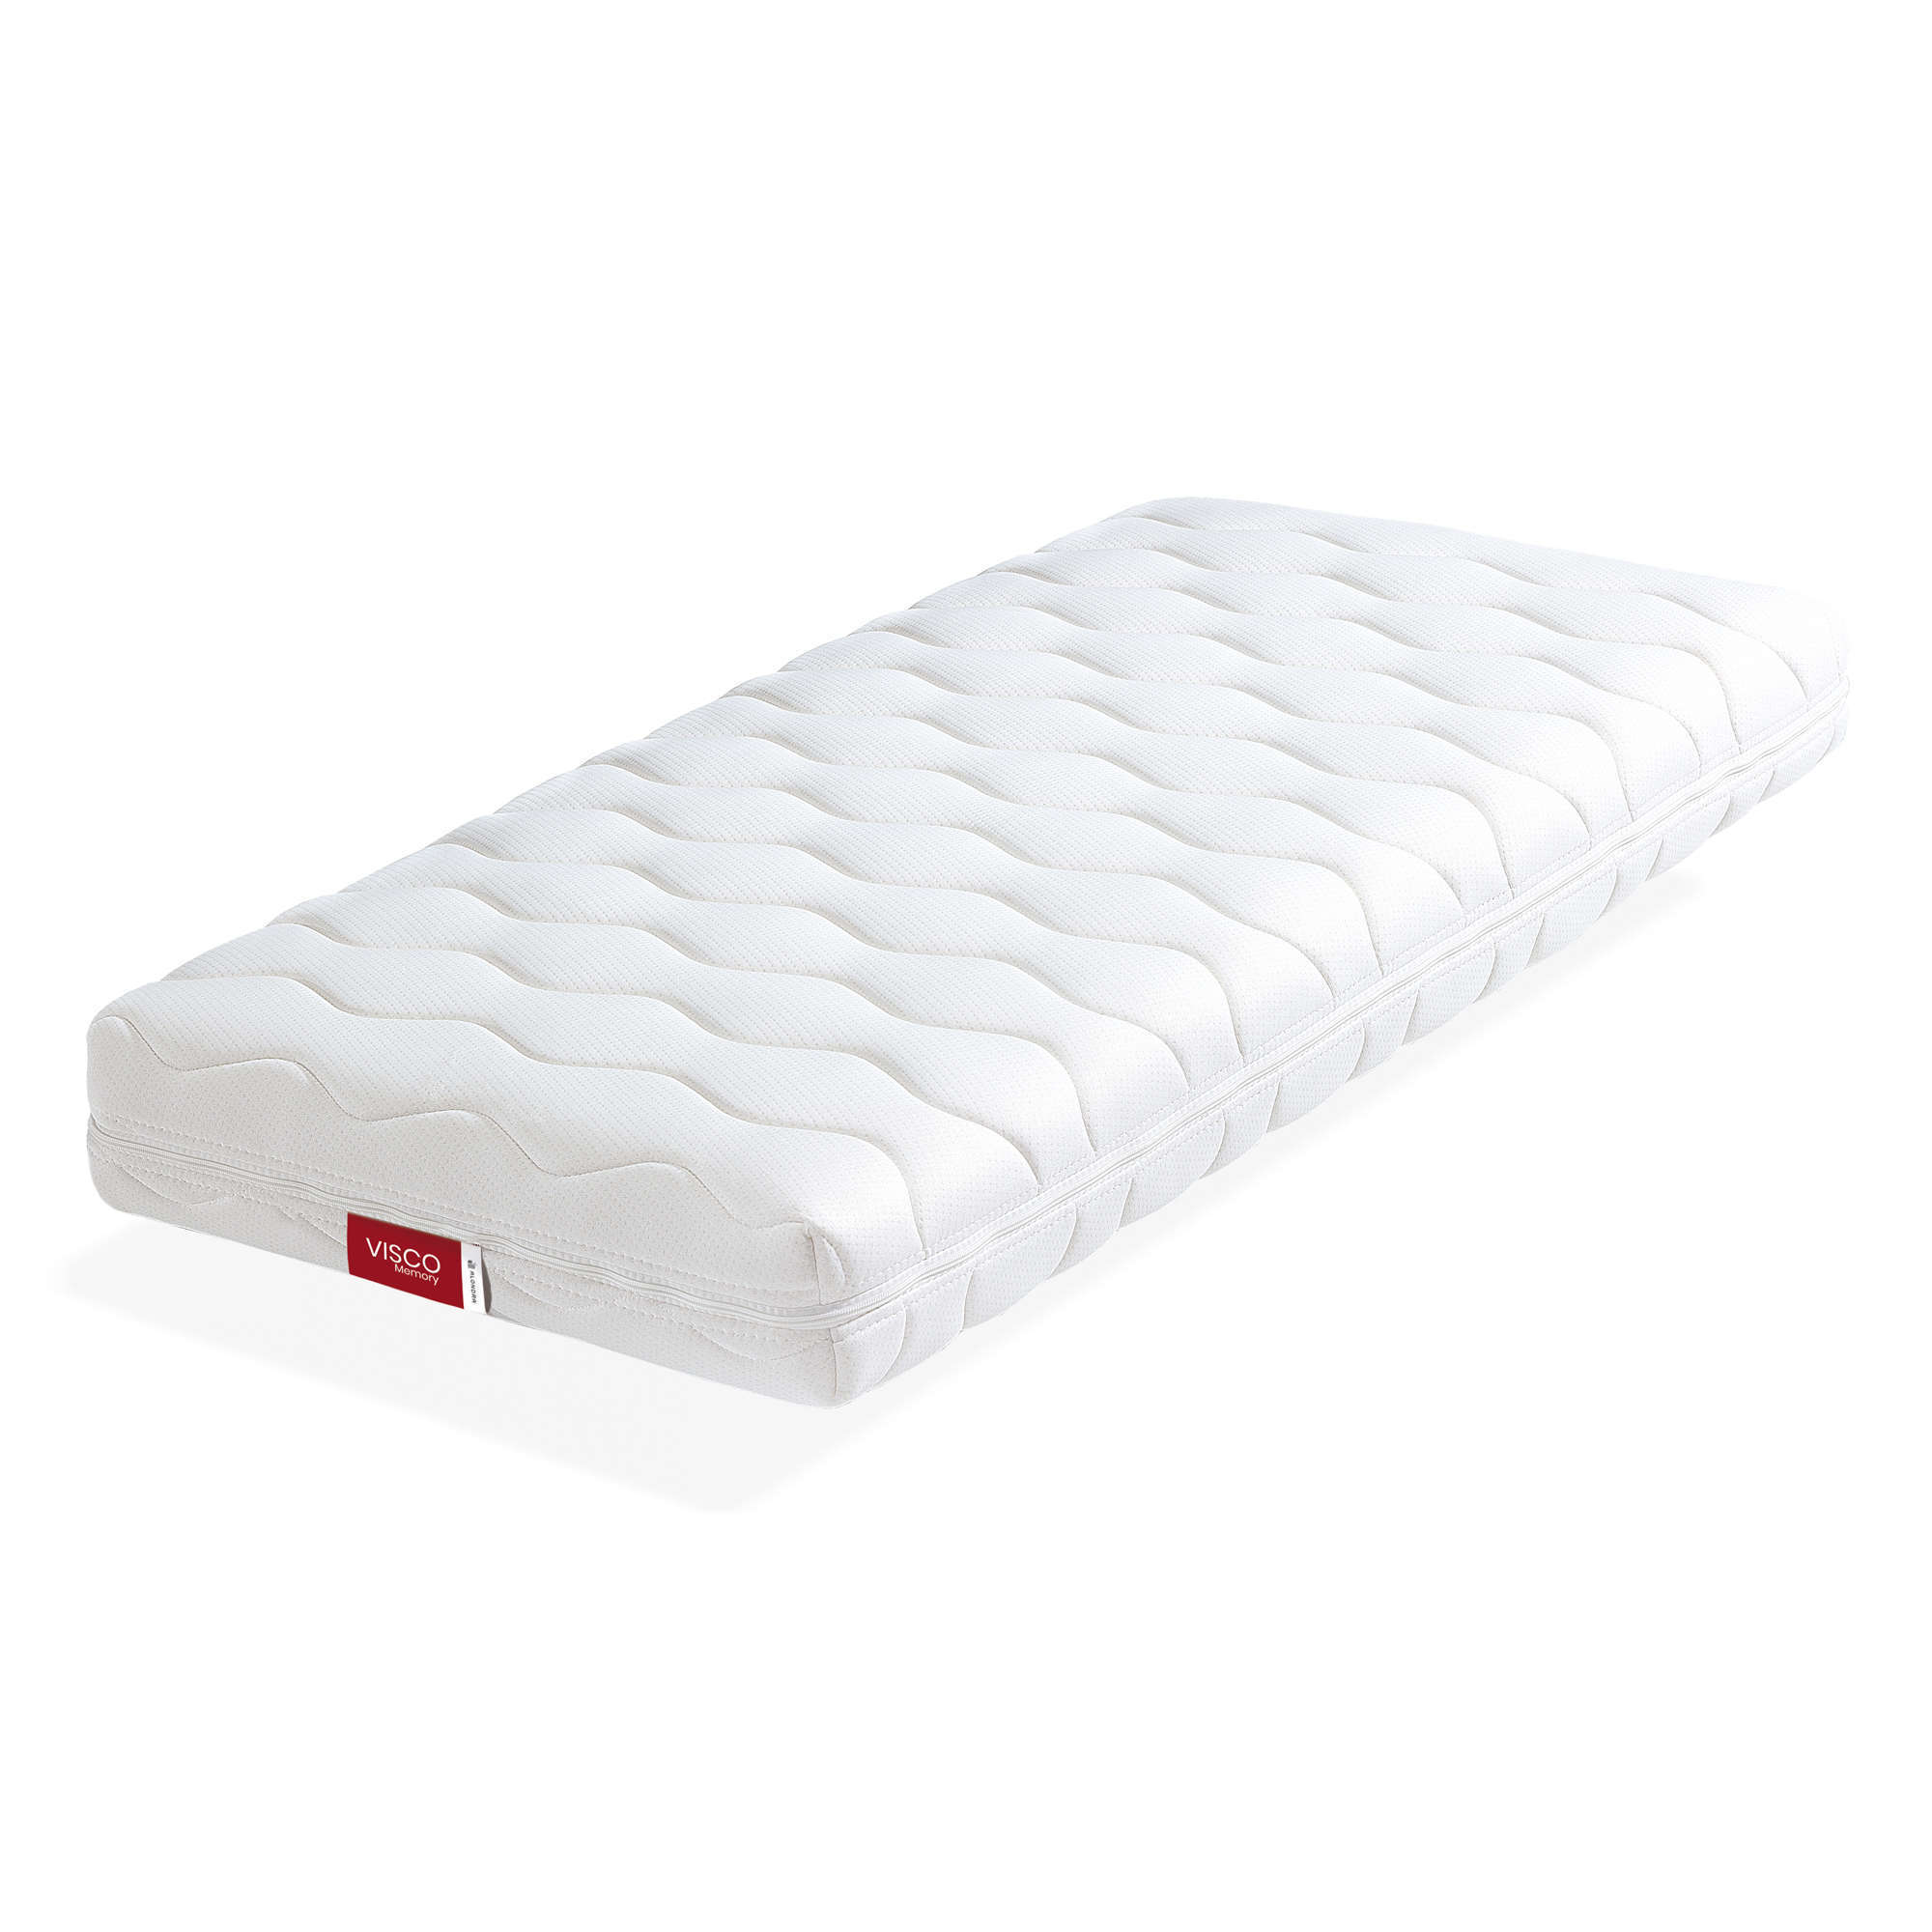 Memory foam mattress for bed 70x140cm